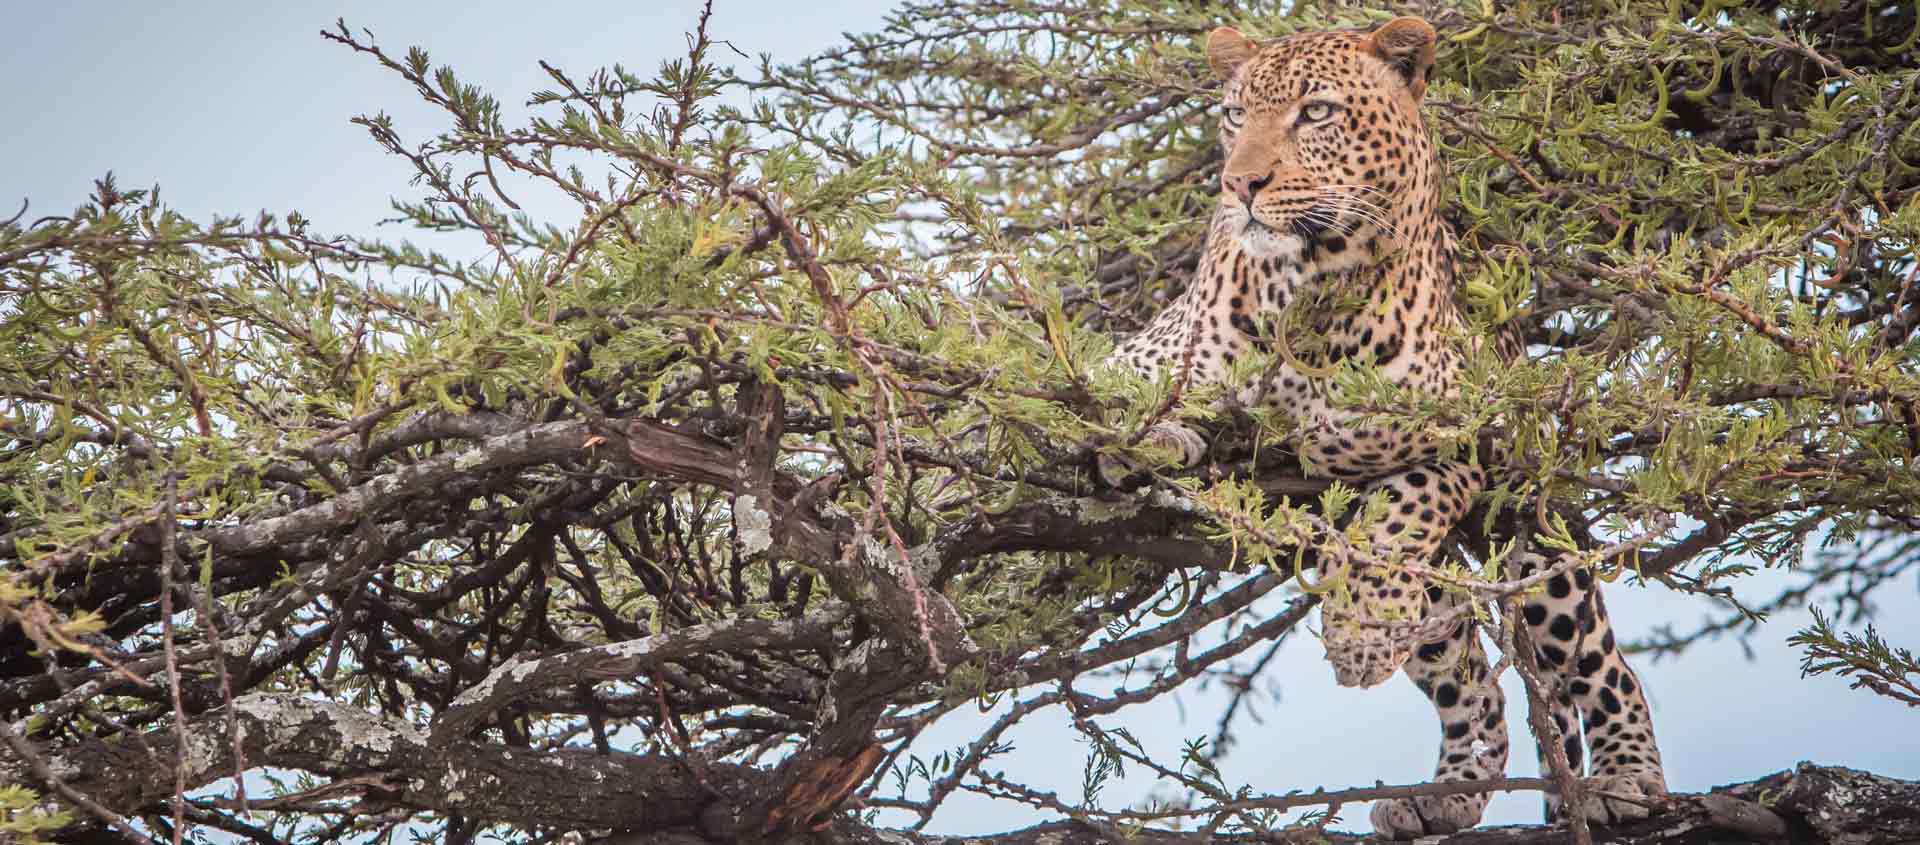 Tanzania safari of the Serengeti and Mahale image of a Leopard in a tree